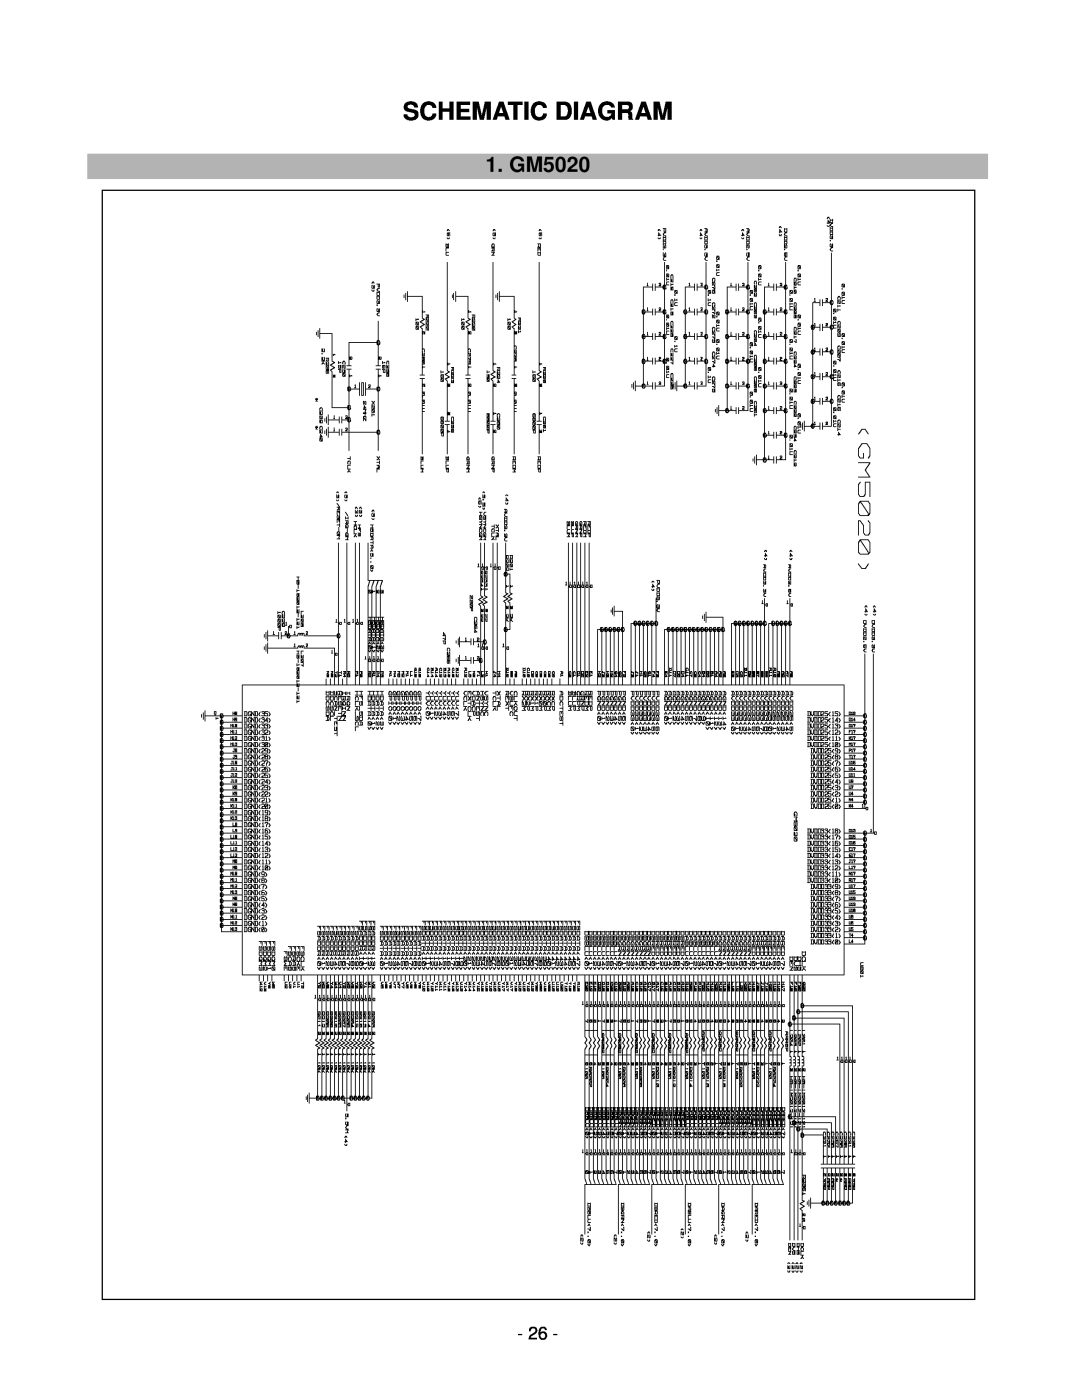 LG Electronics LCD 782LS service manual Schematic Diagram, 1. GM5020 